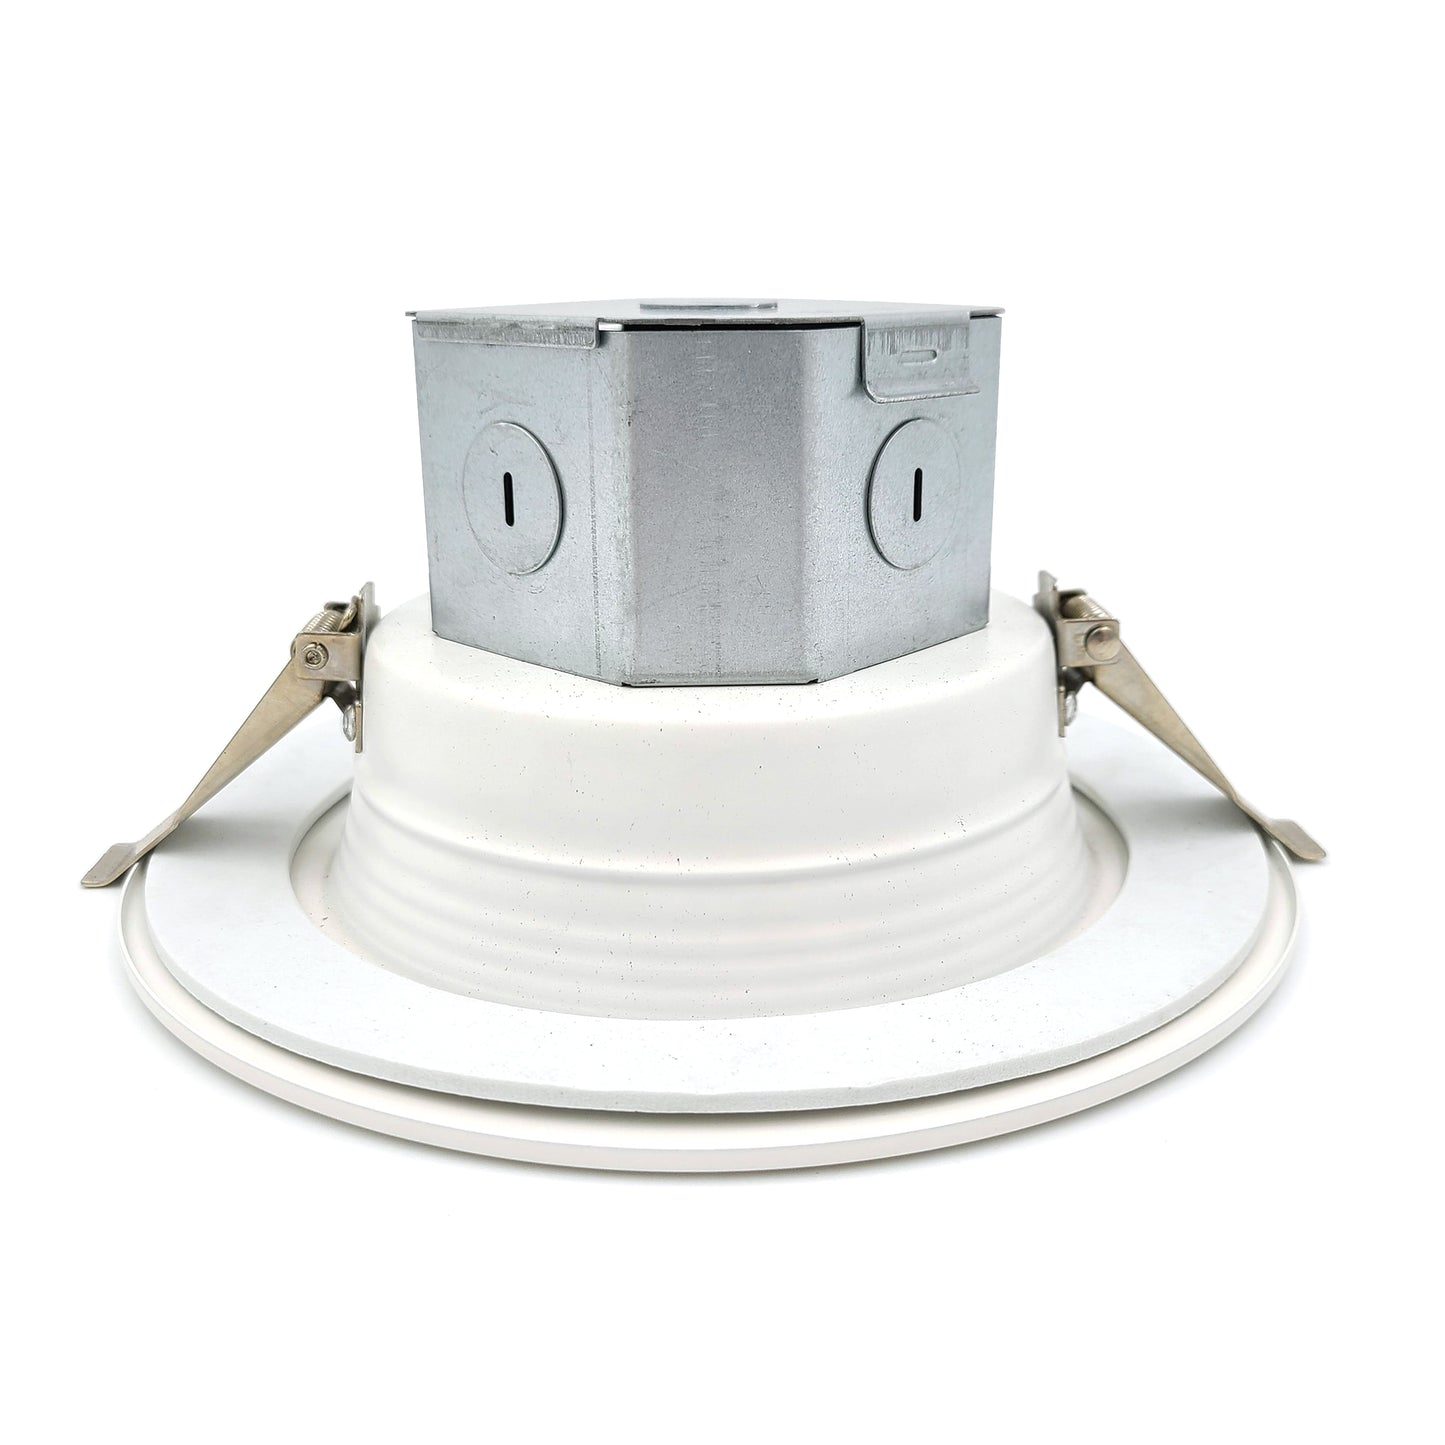 BODLED 6" LED Easy Install LED Downlight With J-Box Cool White 960 Lumens